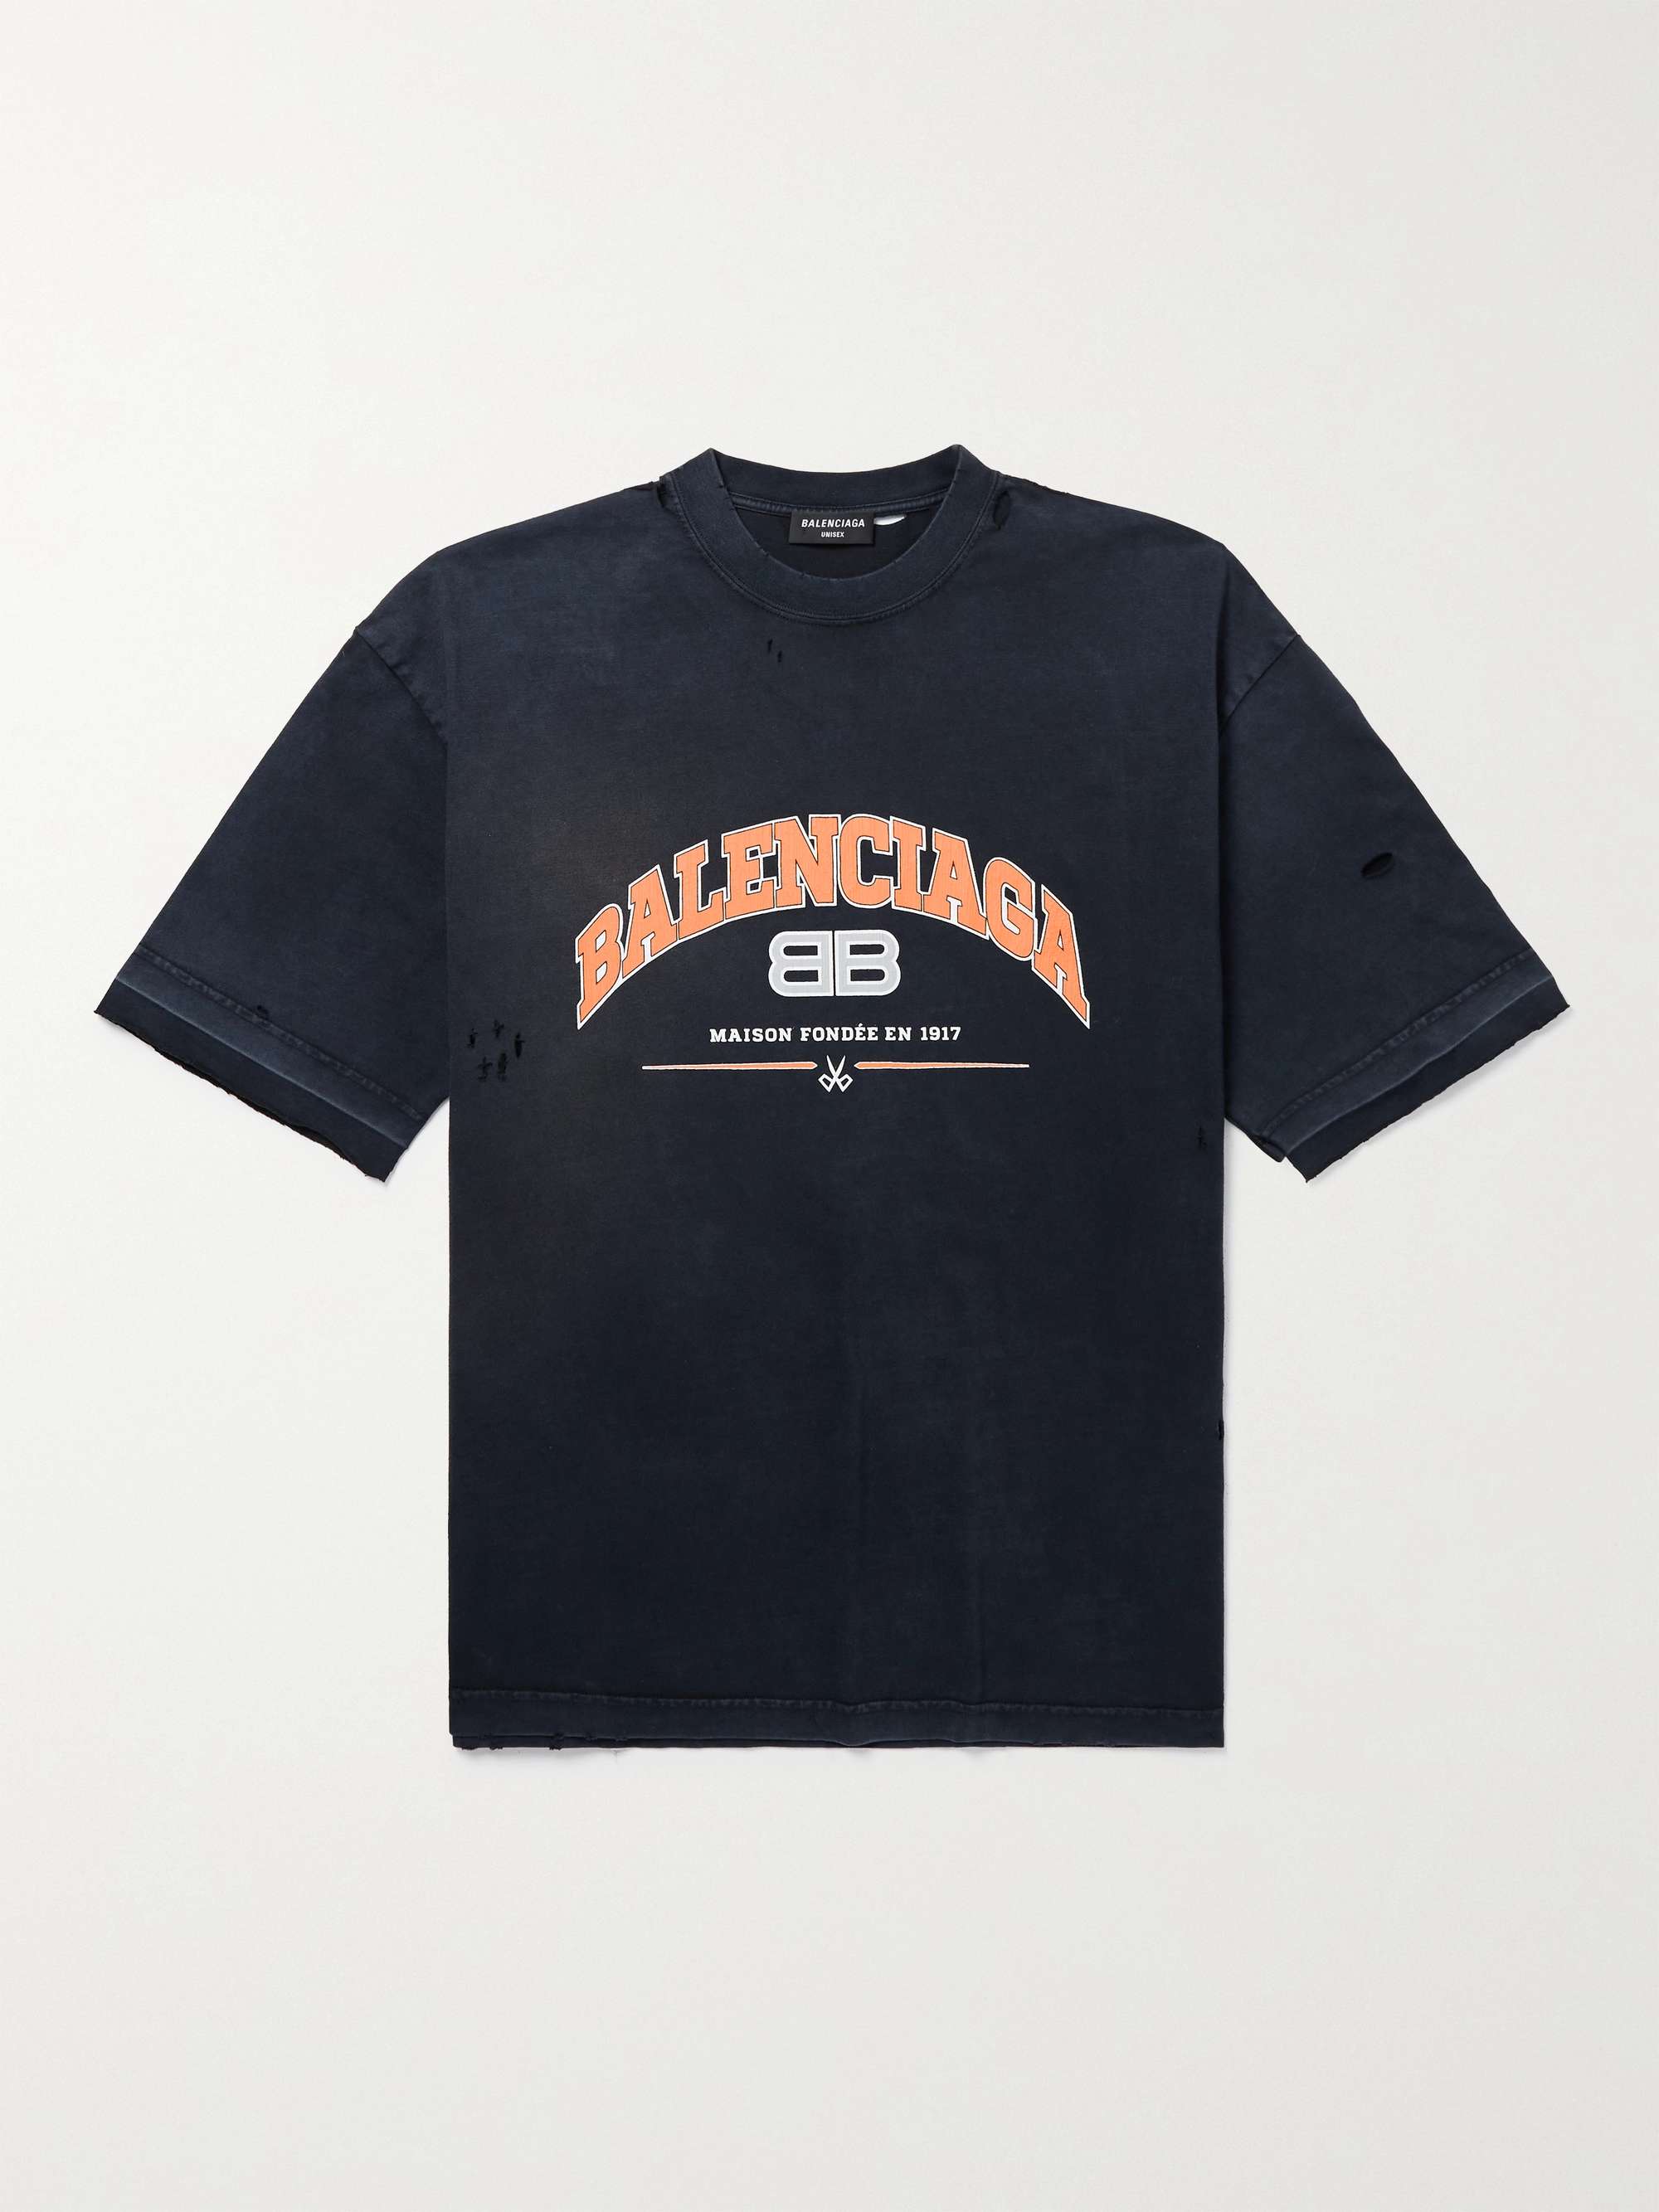 BALENCIAGA Distressed Logo-Print Washed Cotton-Jersey T-Shirt | MR PORTER